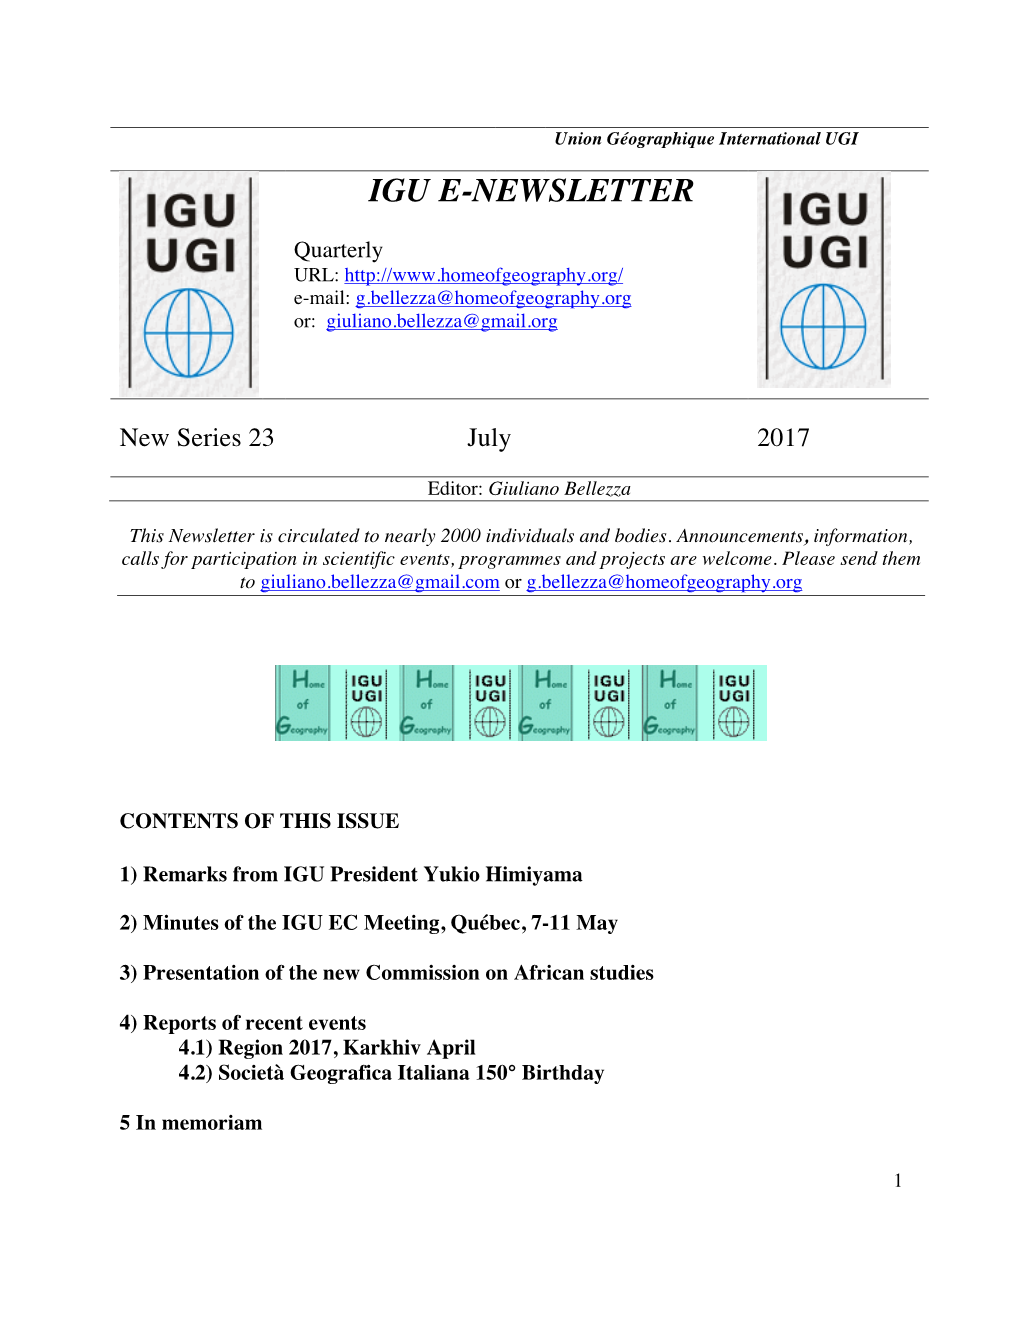 IGU E-Newsletter July 2017